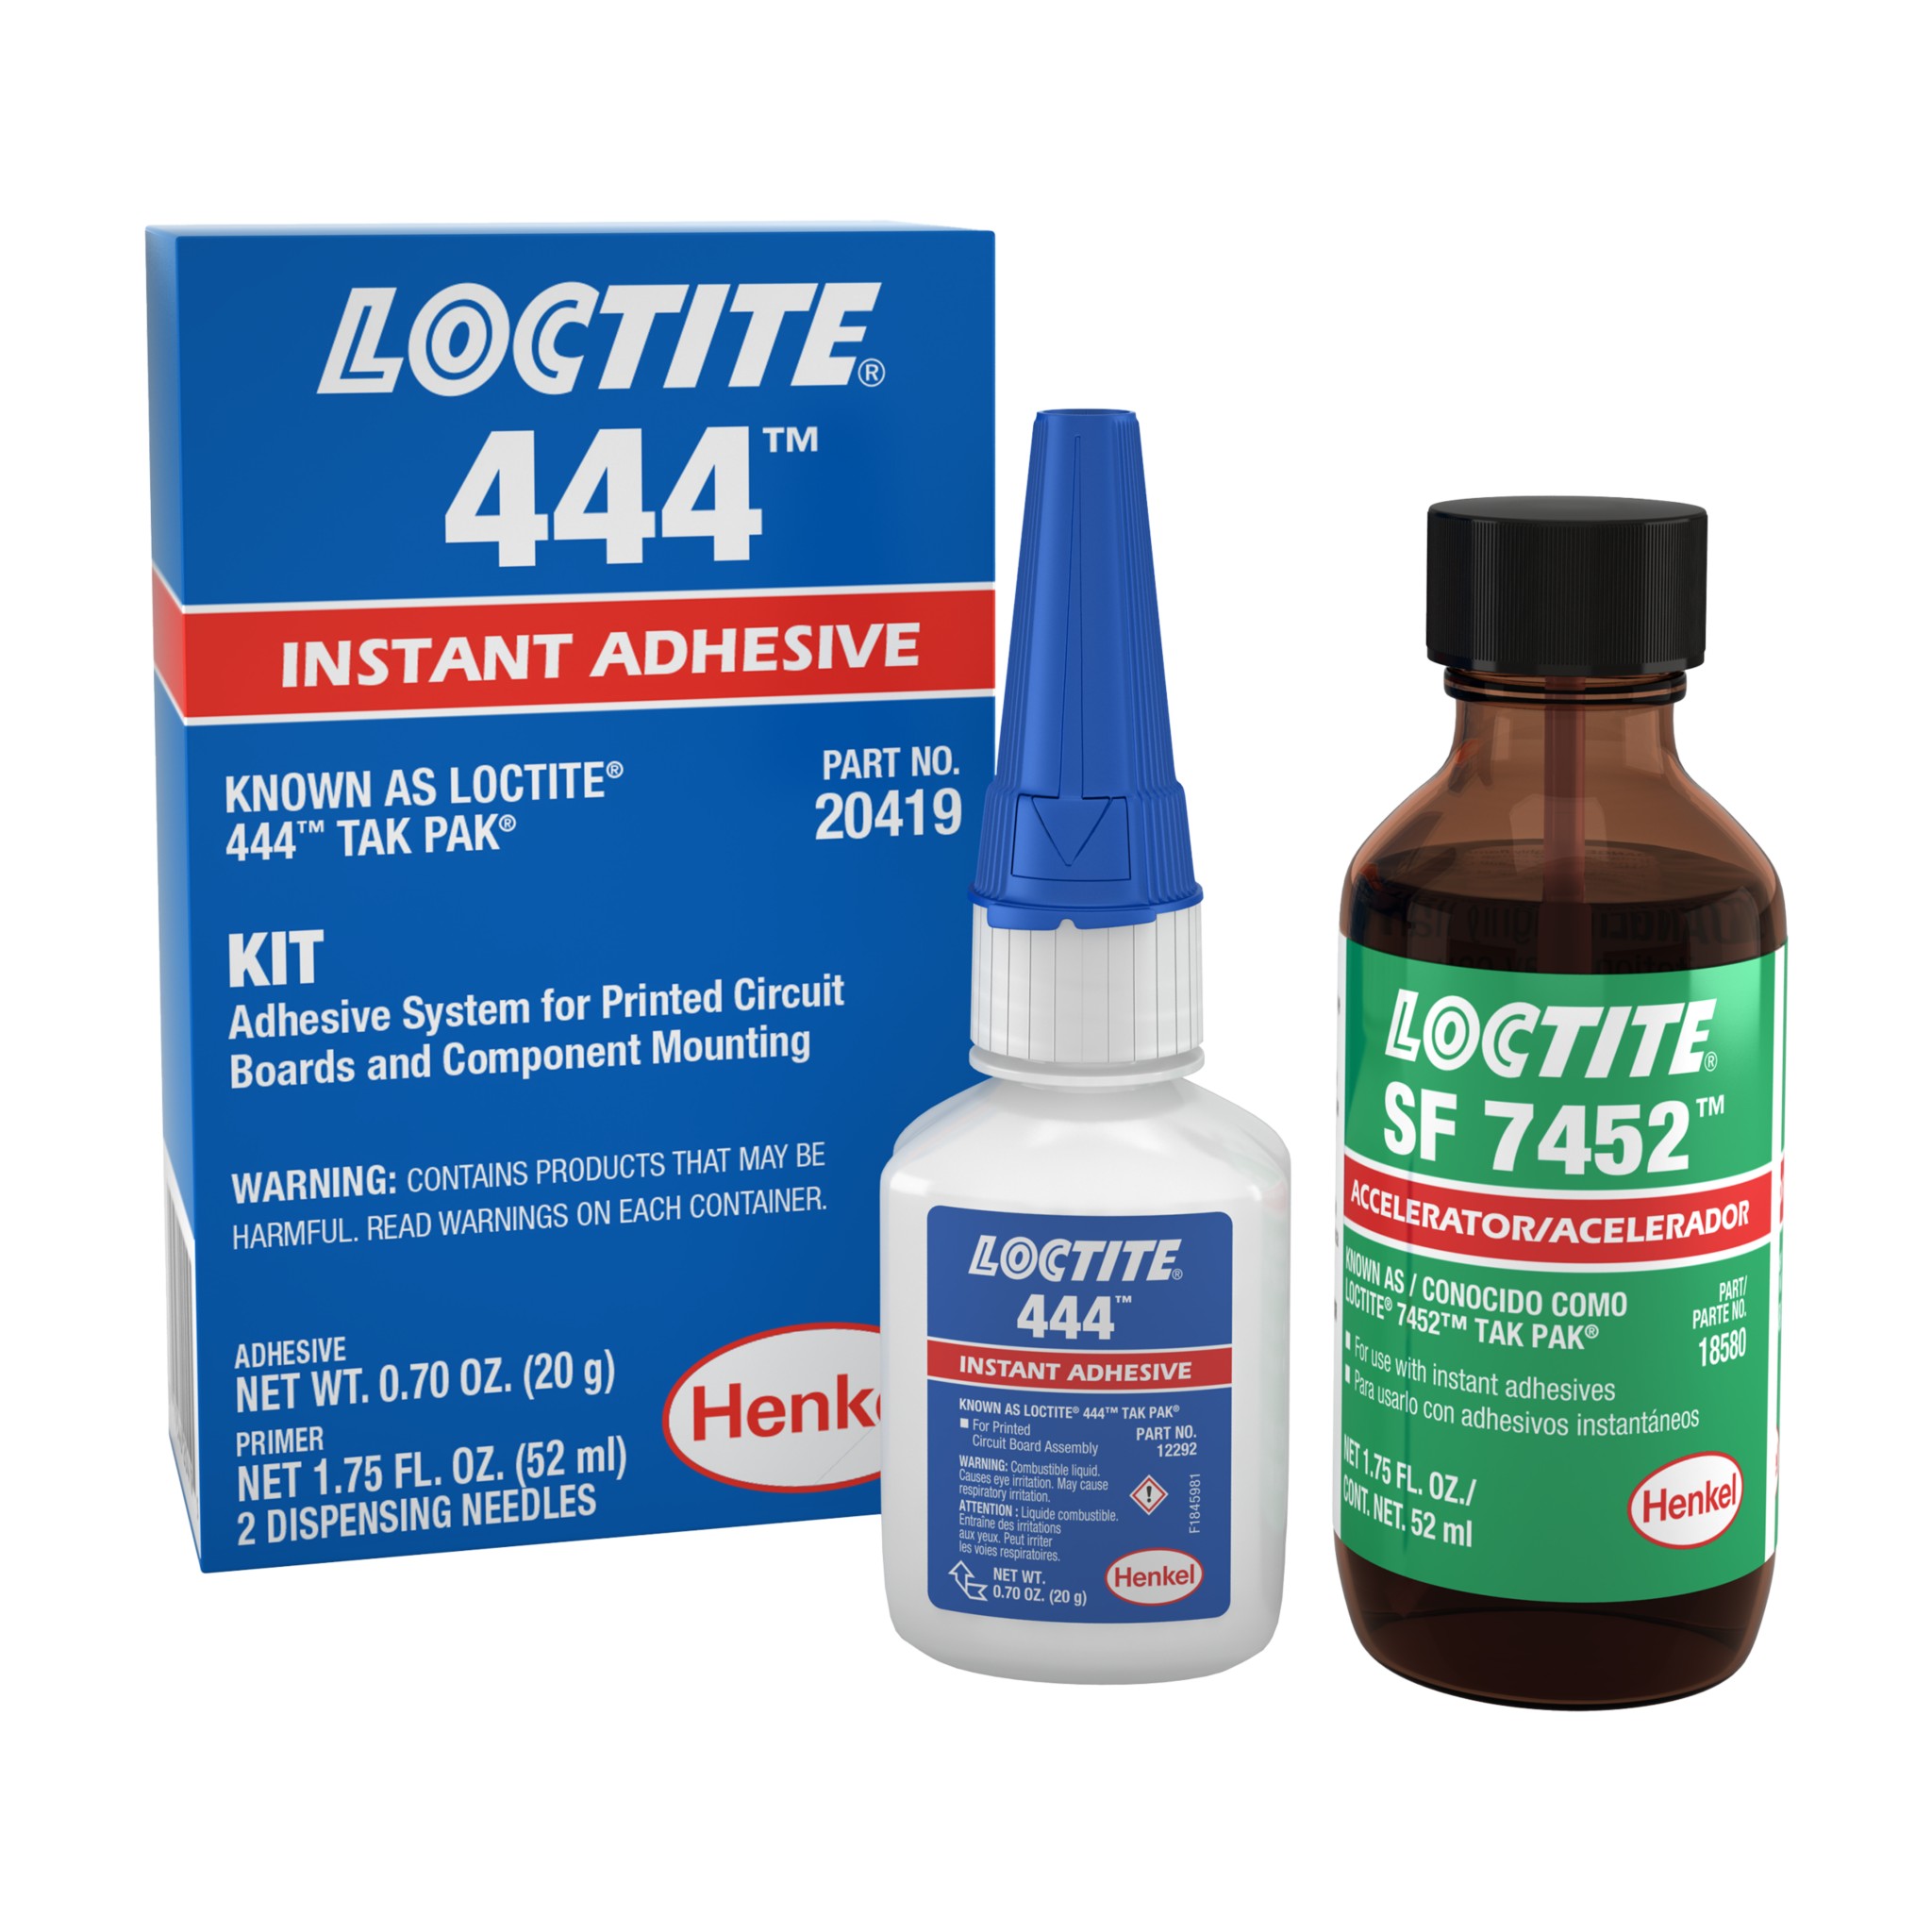 fremstille pilfer Ritual LOCTITE 444 - Instant adhesive - Henkel Adhesives